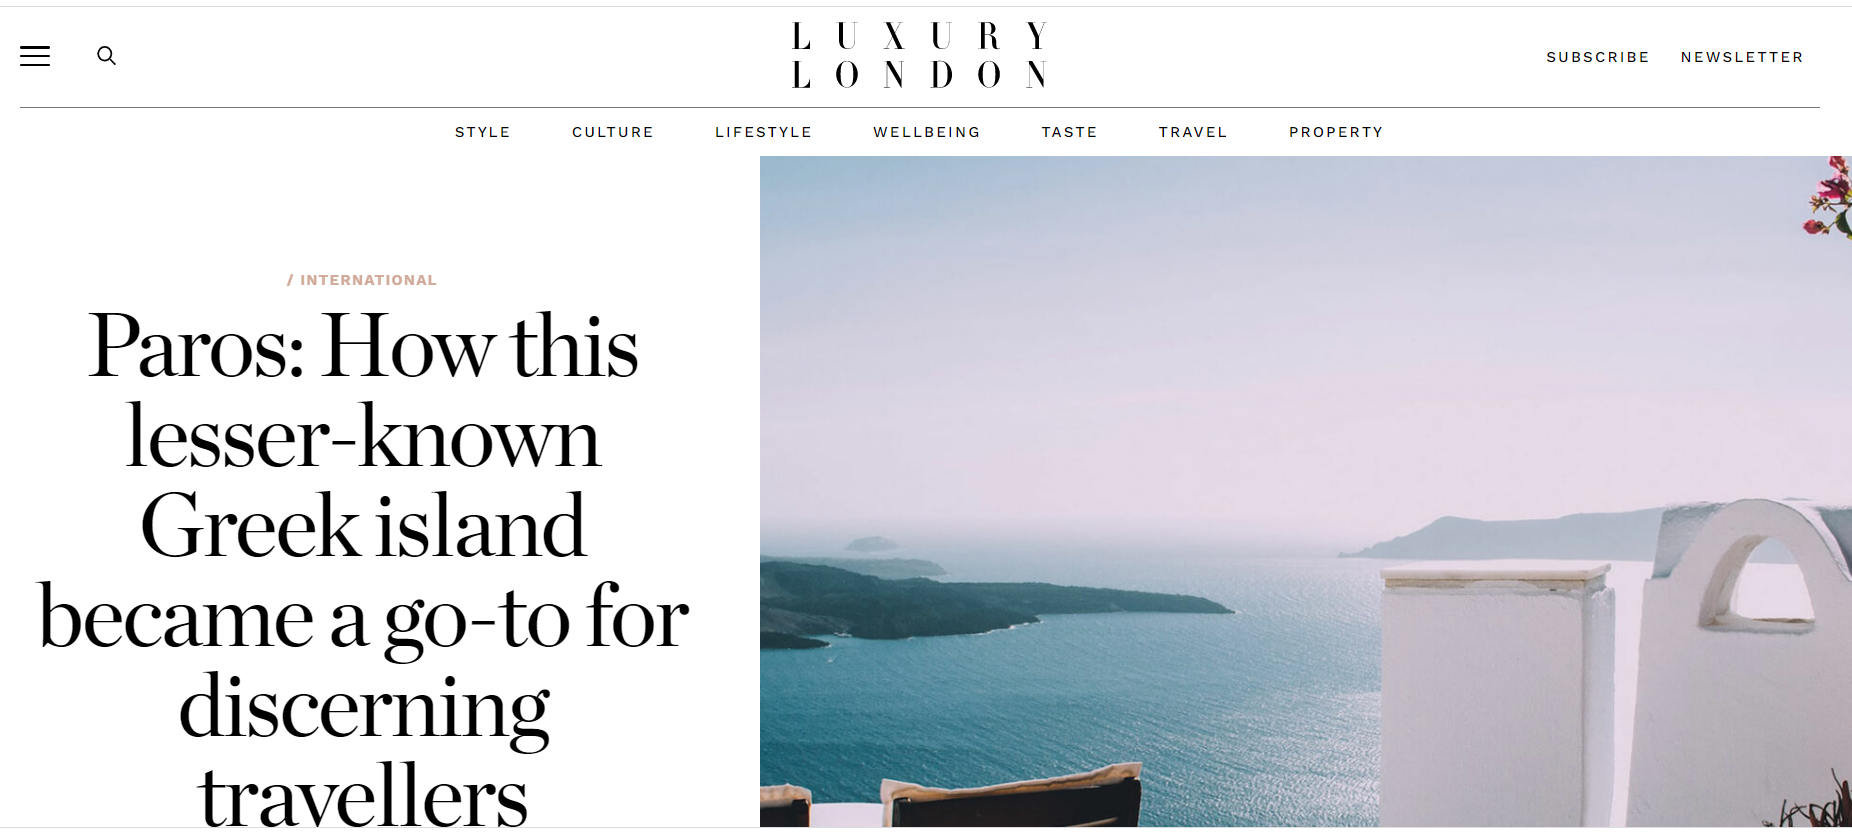 Luxury London (UK) – August 2022